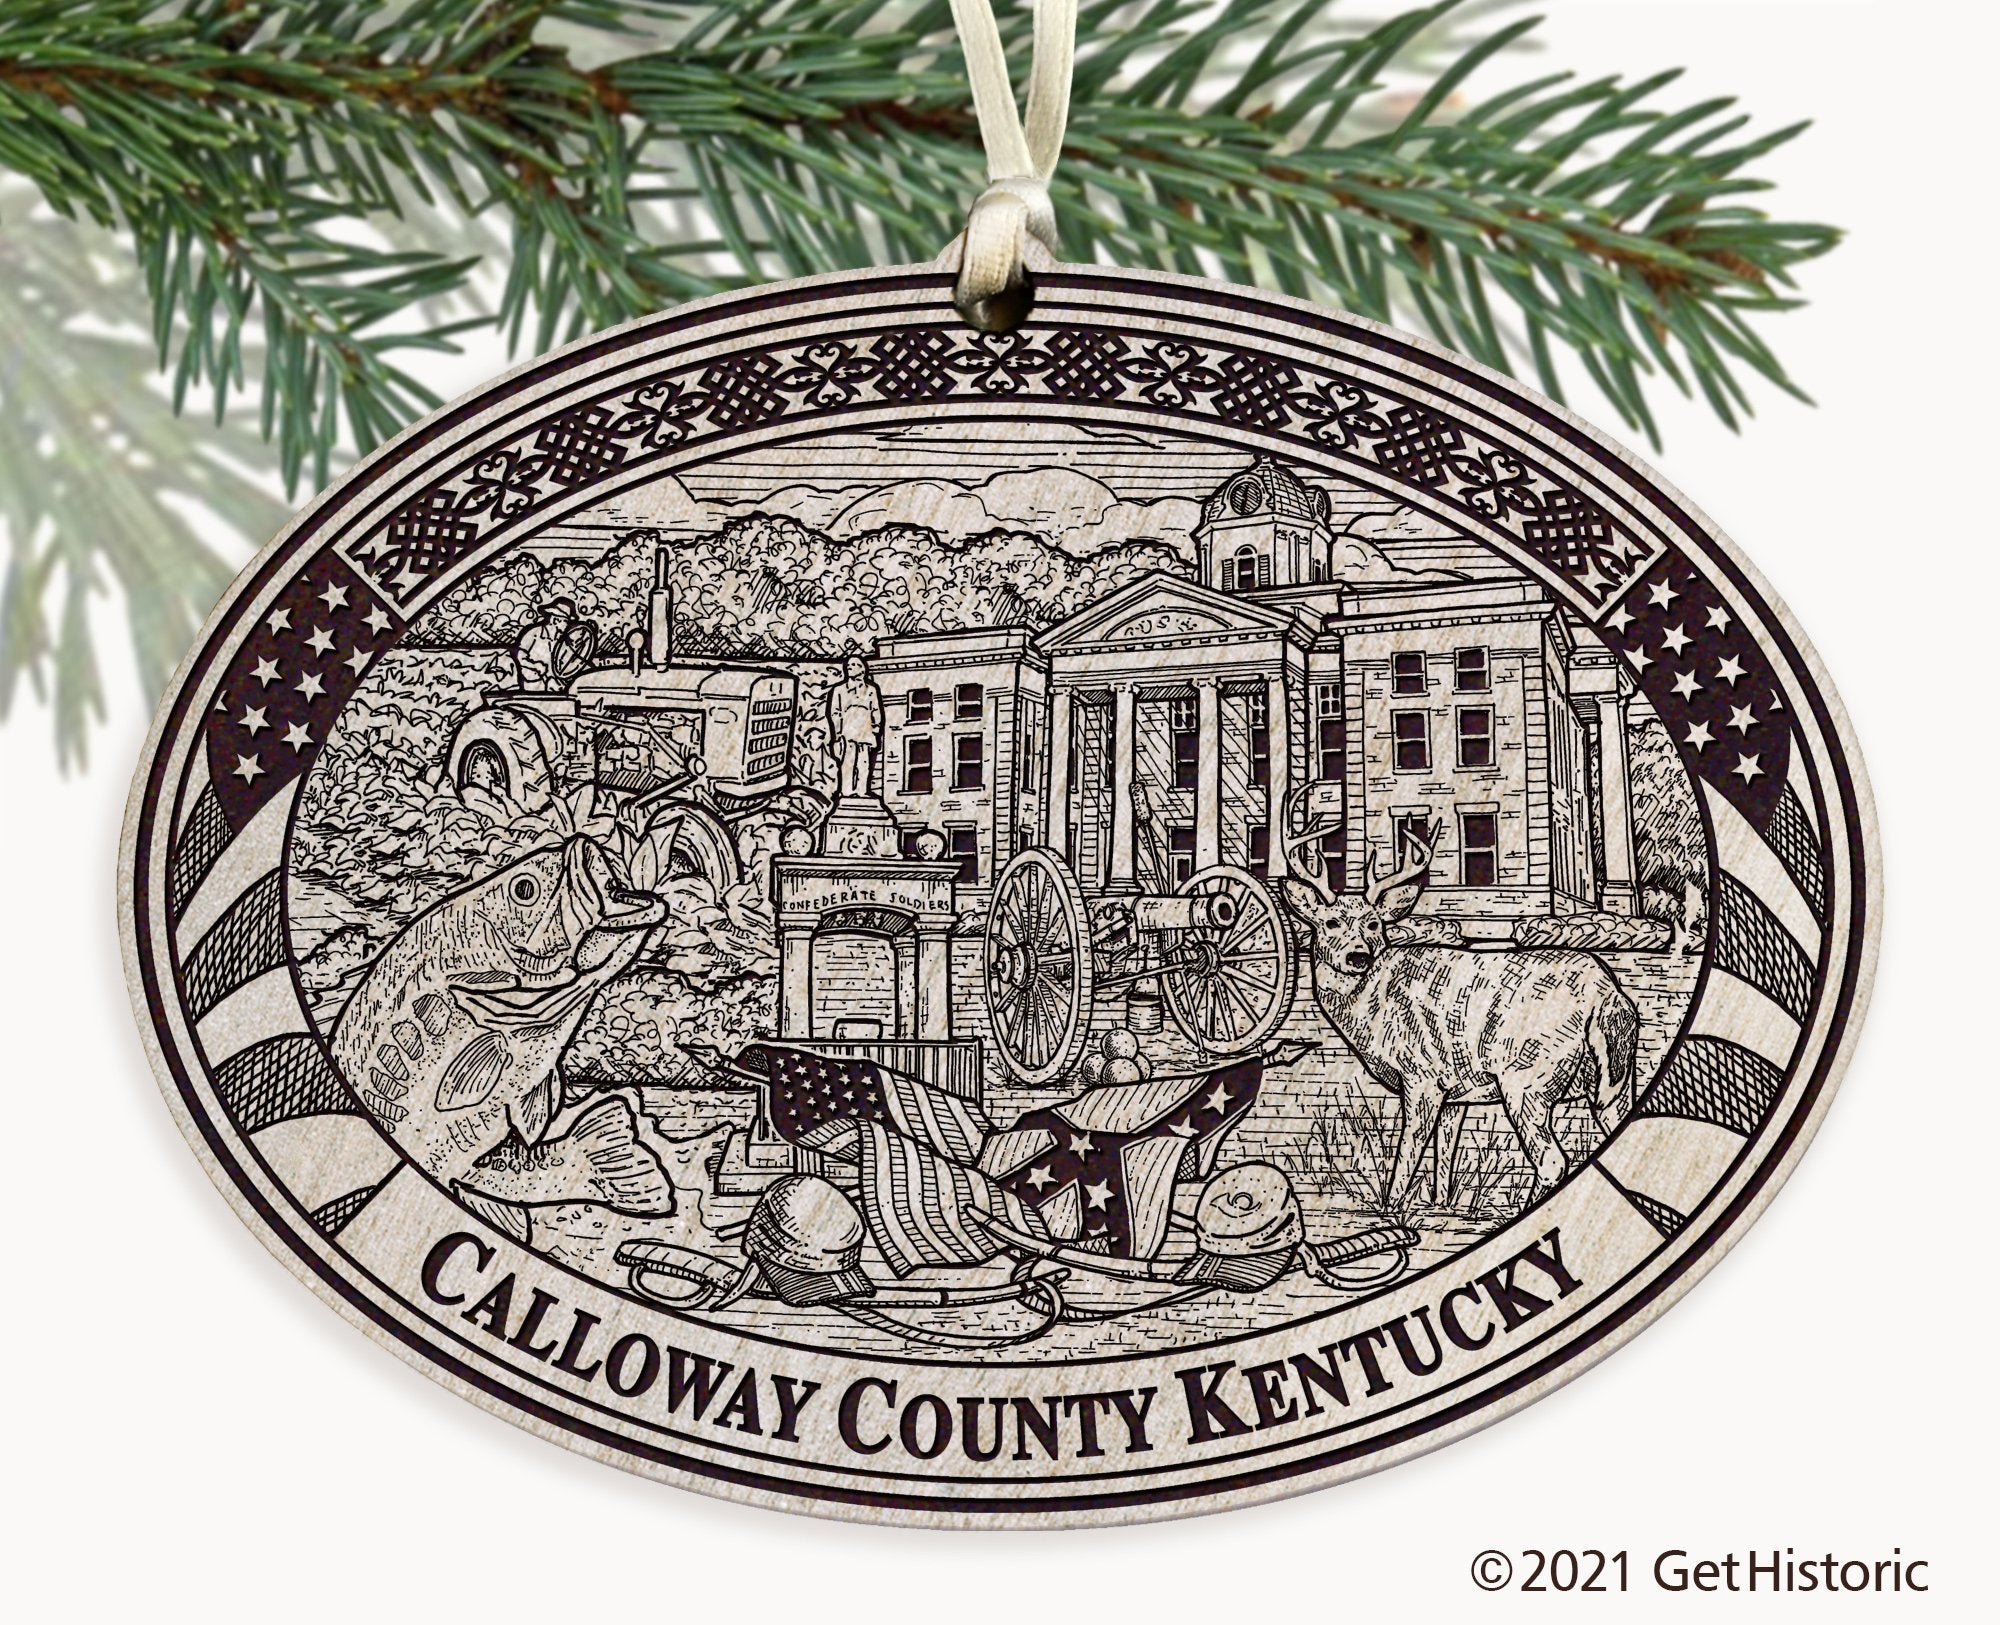 Calloway County Kentucky Engraved Ornament